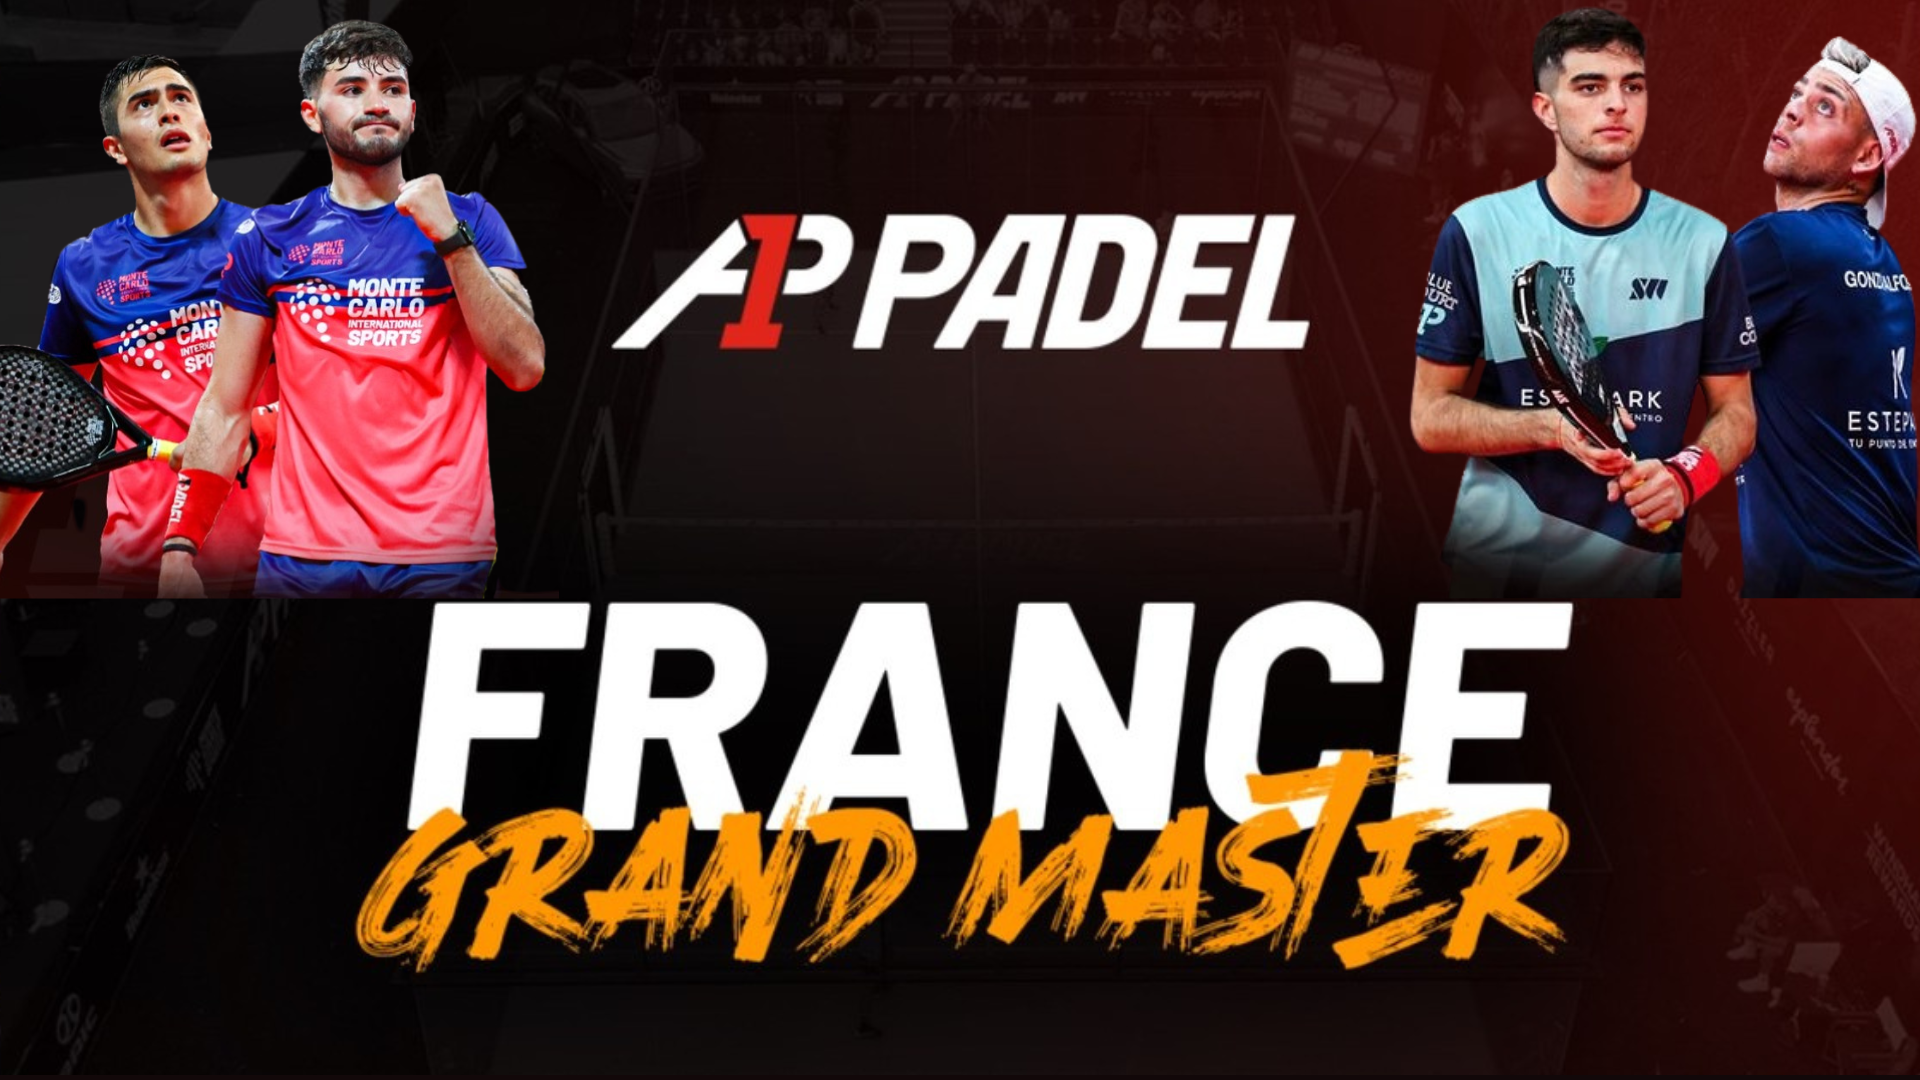 A1 Padel Frankreichs Großmeister – De Pascual/Alfonso im Finale gegen Dal Bianco/Arce